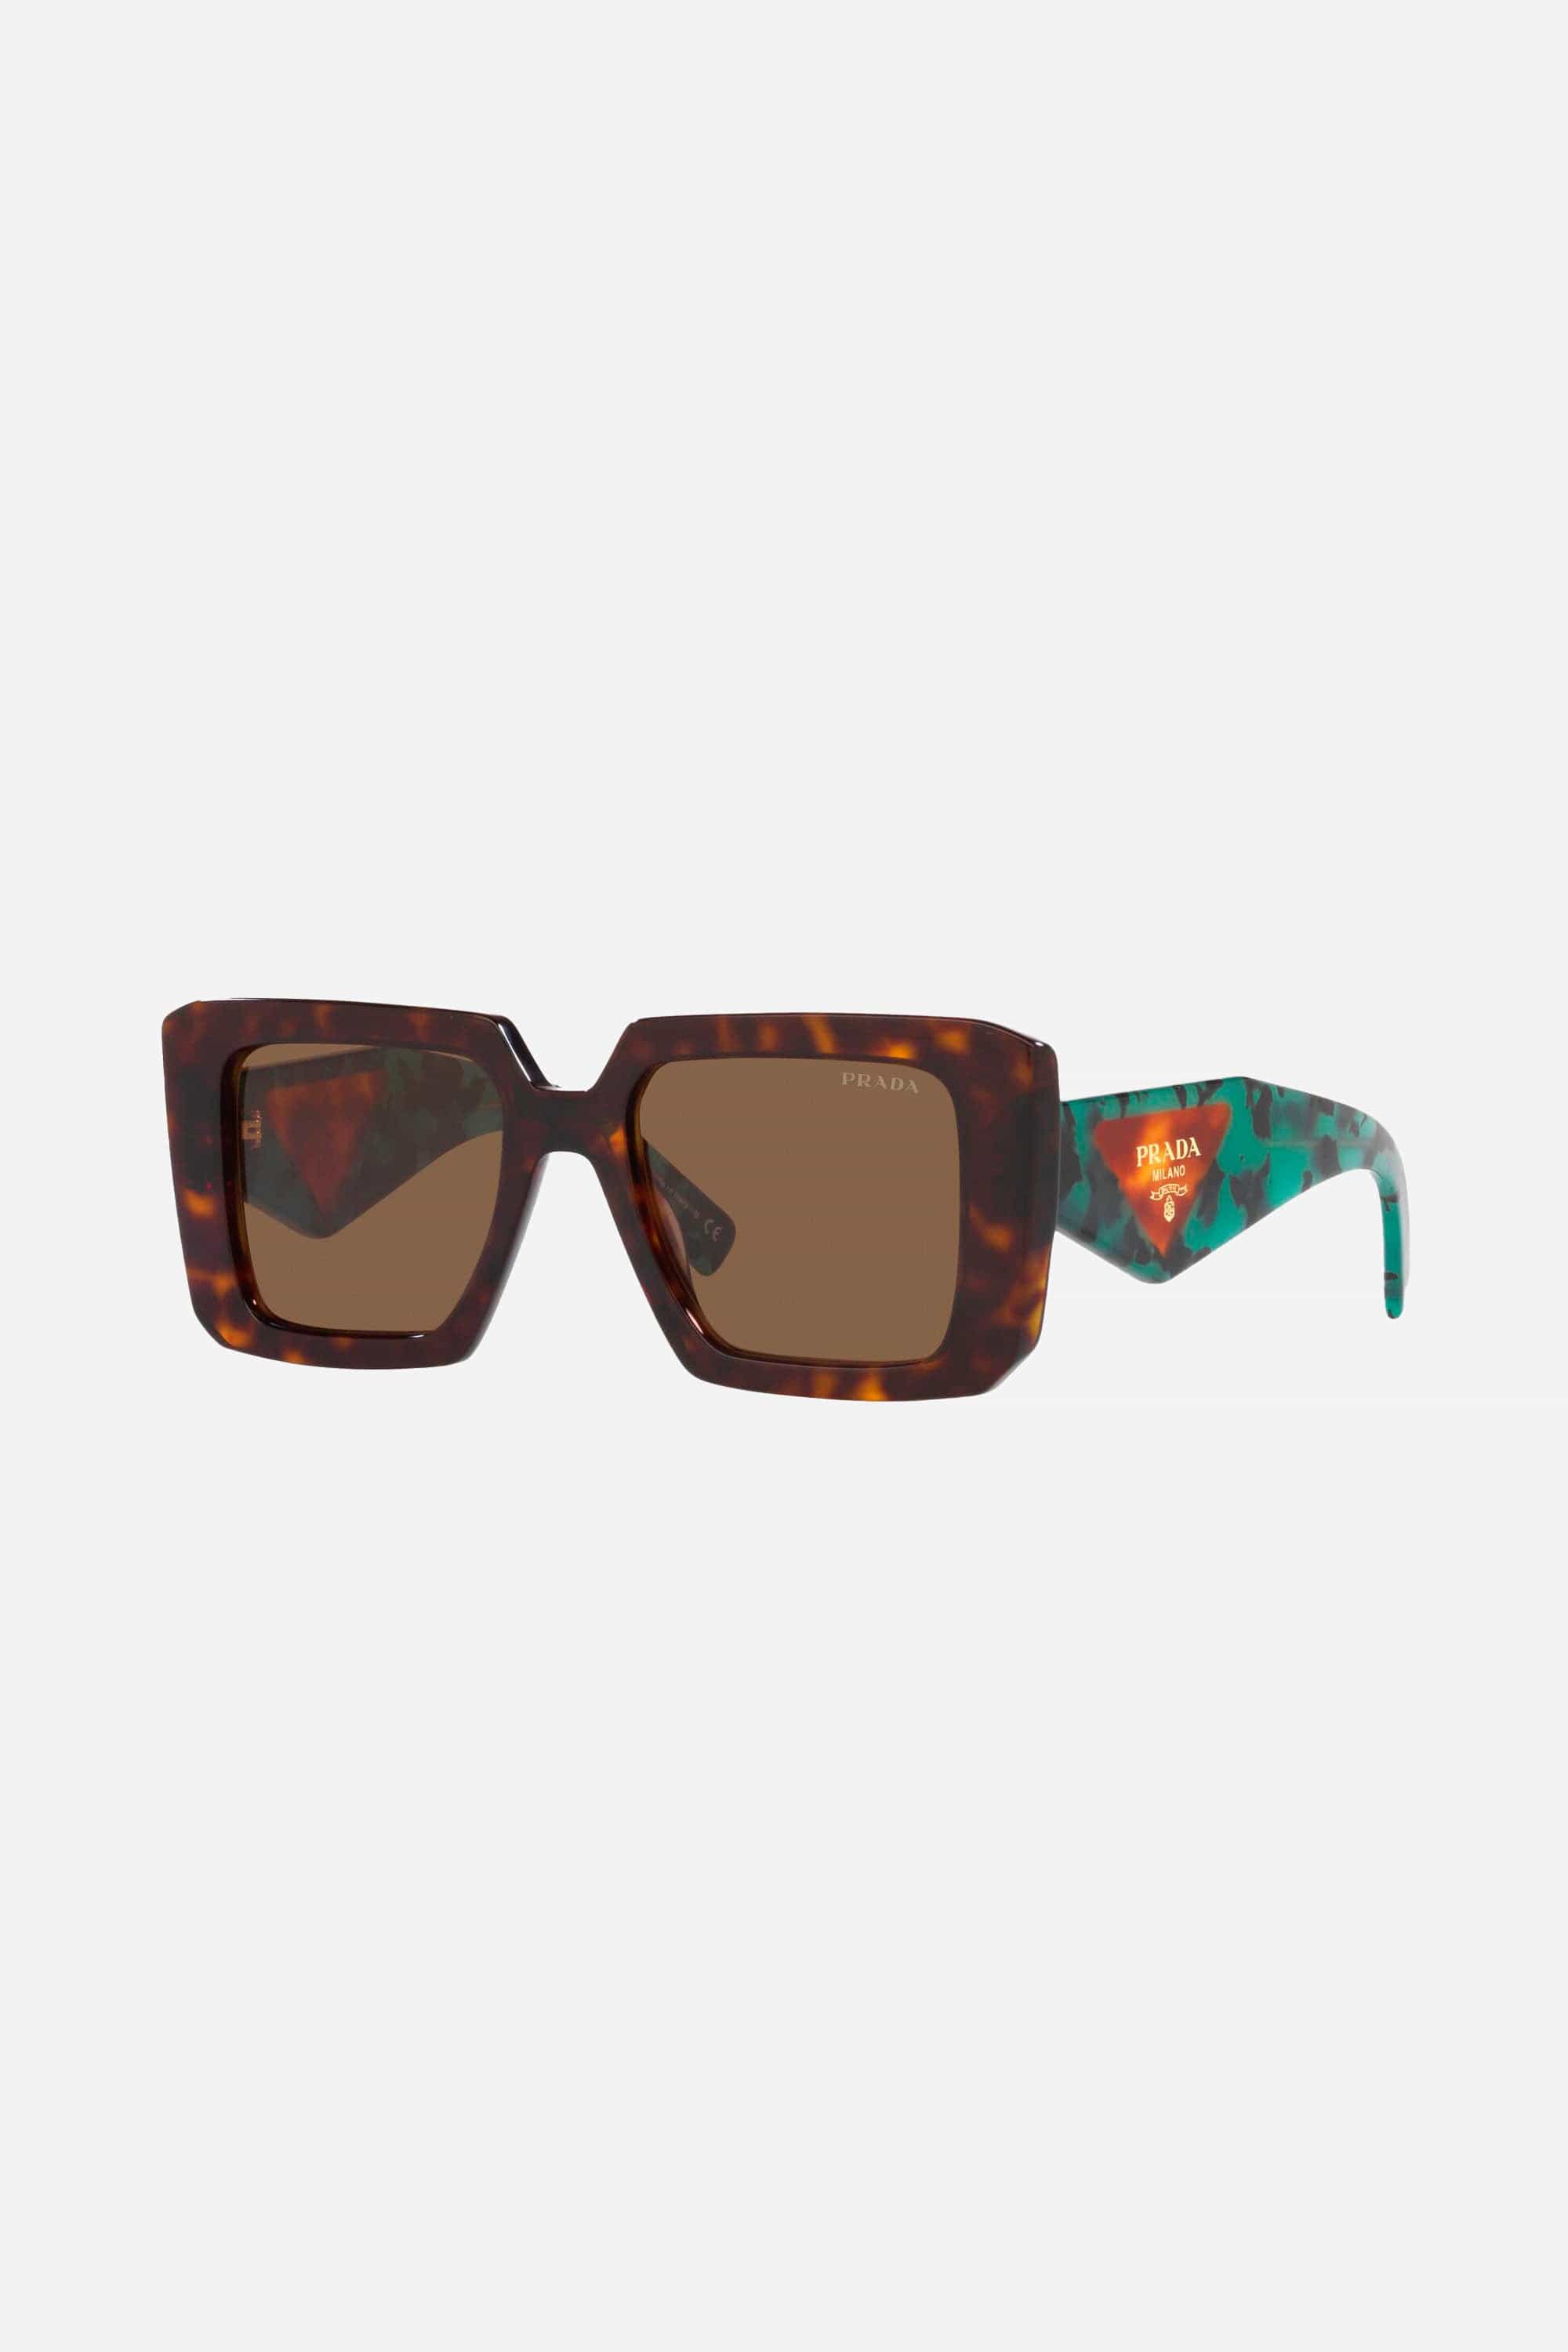 Prada squared havana sunglasses featuring the signature logo triangle - Eyewear Club